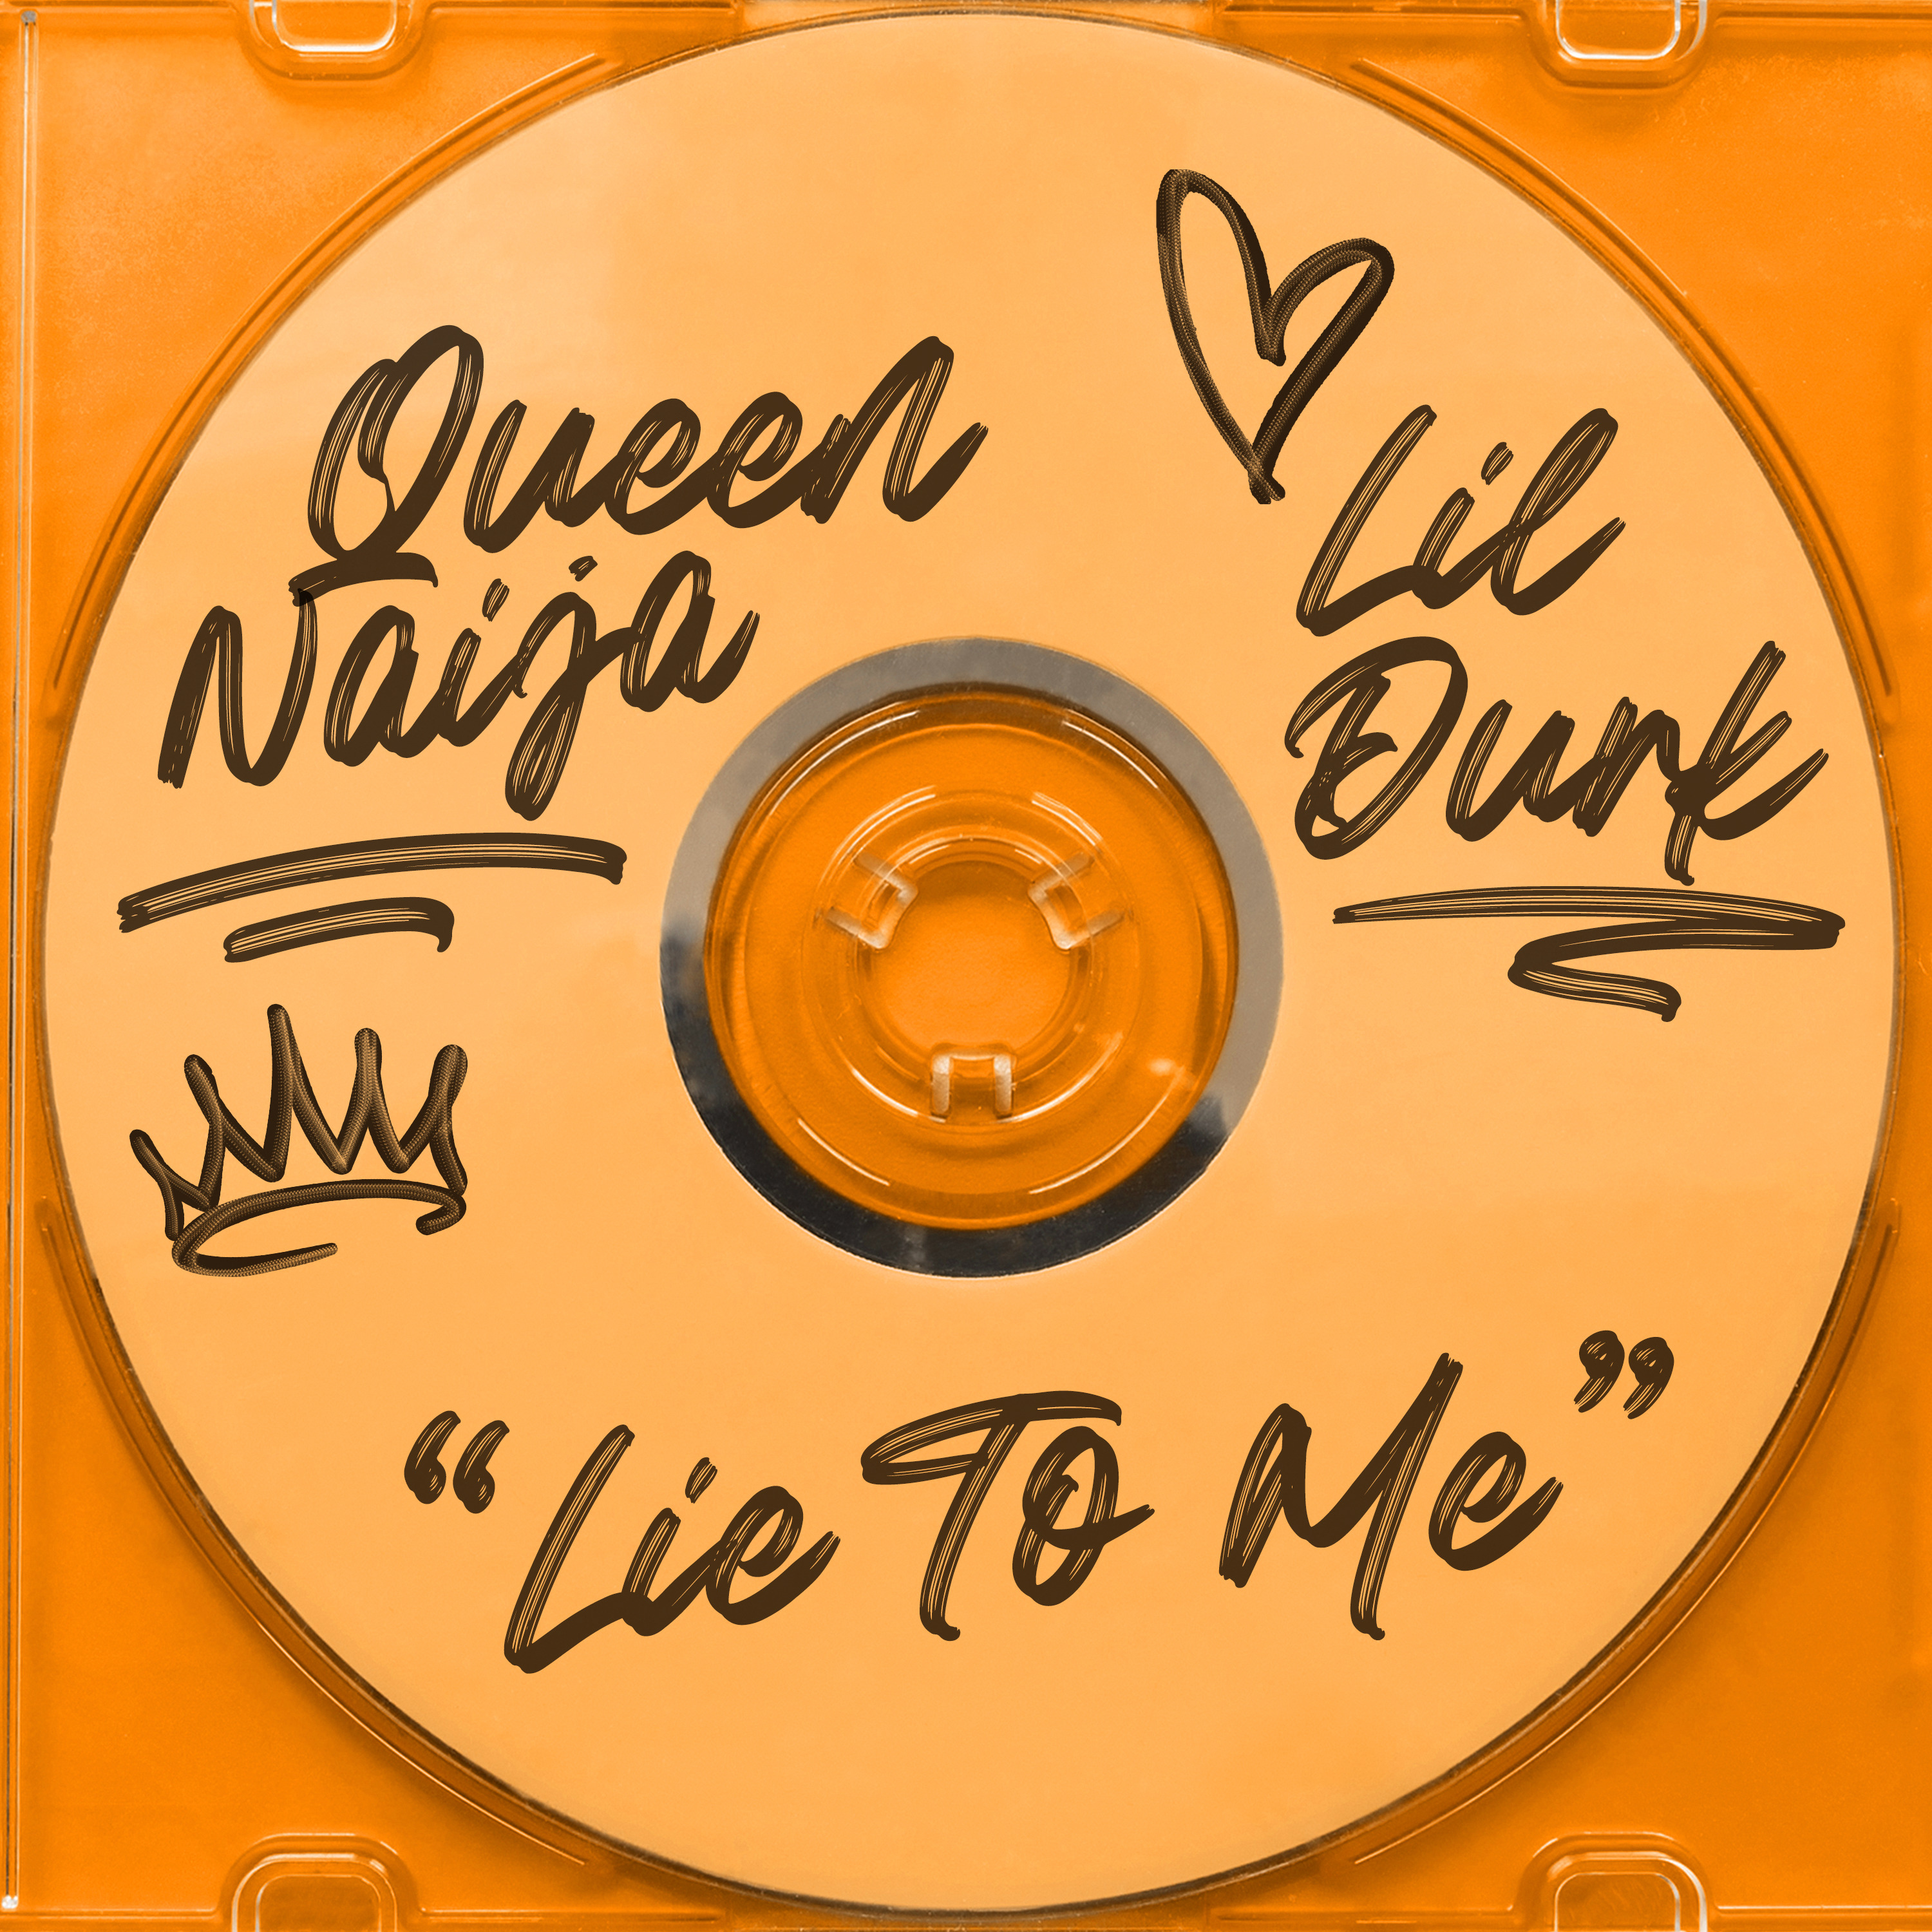 Queen Naija ft Lil Durk - Lie To Me